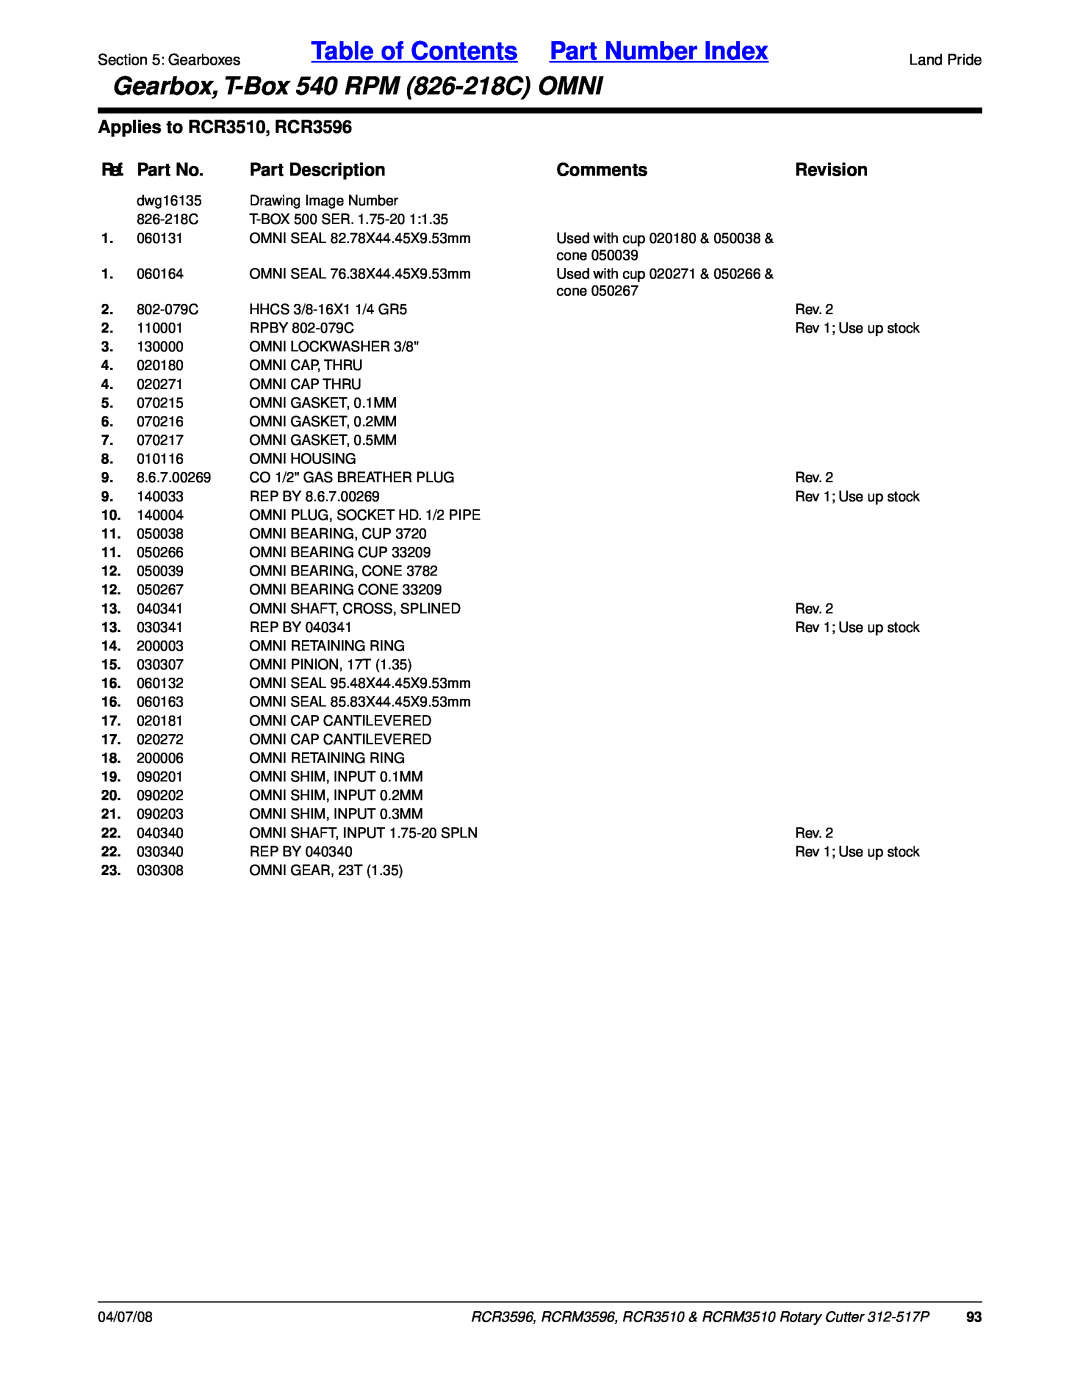 Land Pride RCRM3510 CommentsRevision, Table of Contents Part Number Index, Gearbox,T-Box540 RPM 826-218COMNI, Ref. Part No 